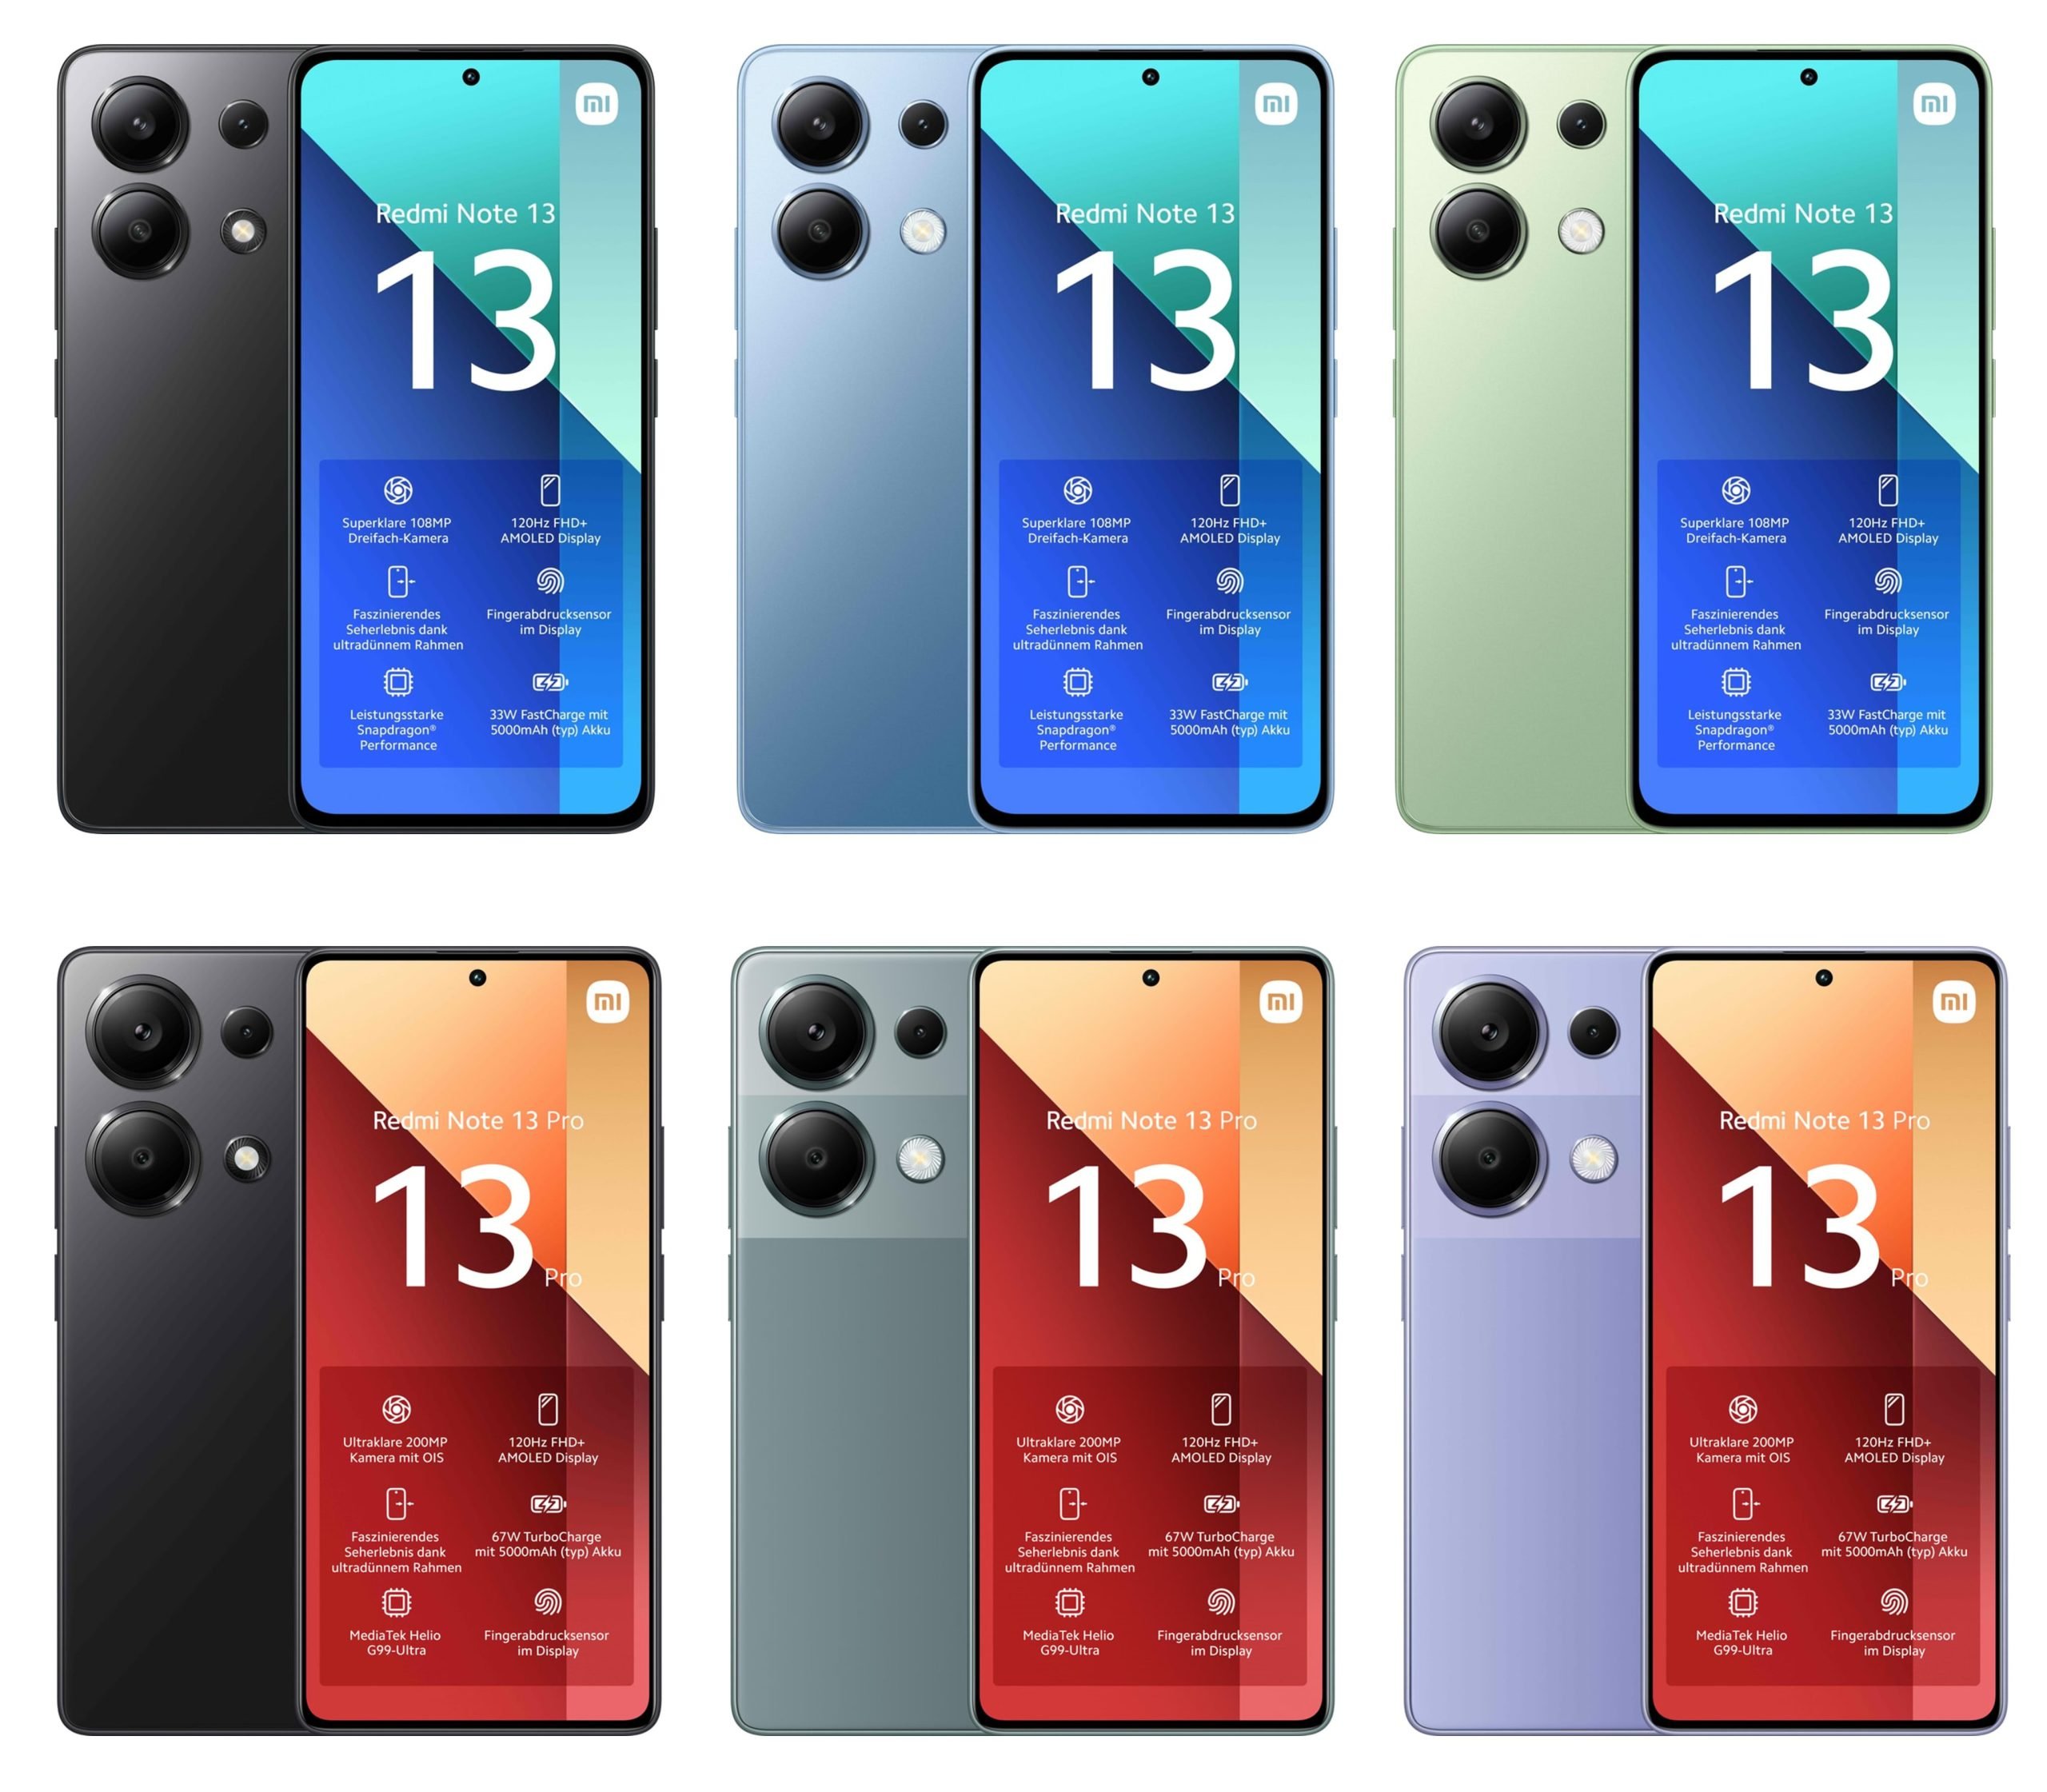 Redmi Note 13 5G, Note 13 Pro 5G, Note 13 Pro+ 5G set to launch on  September 21 - Gizmochina